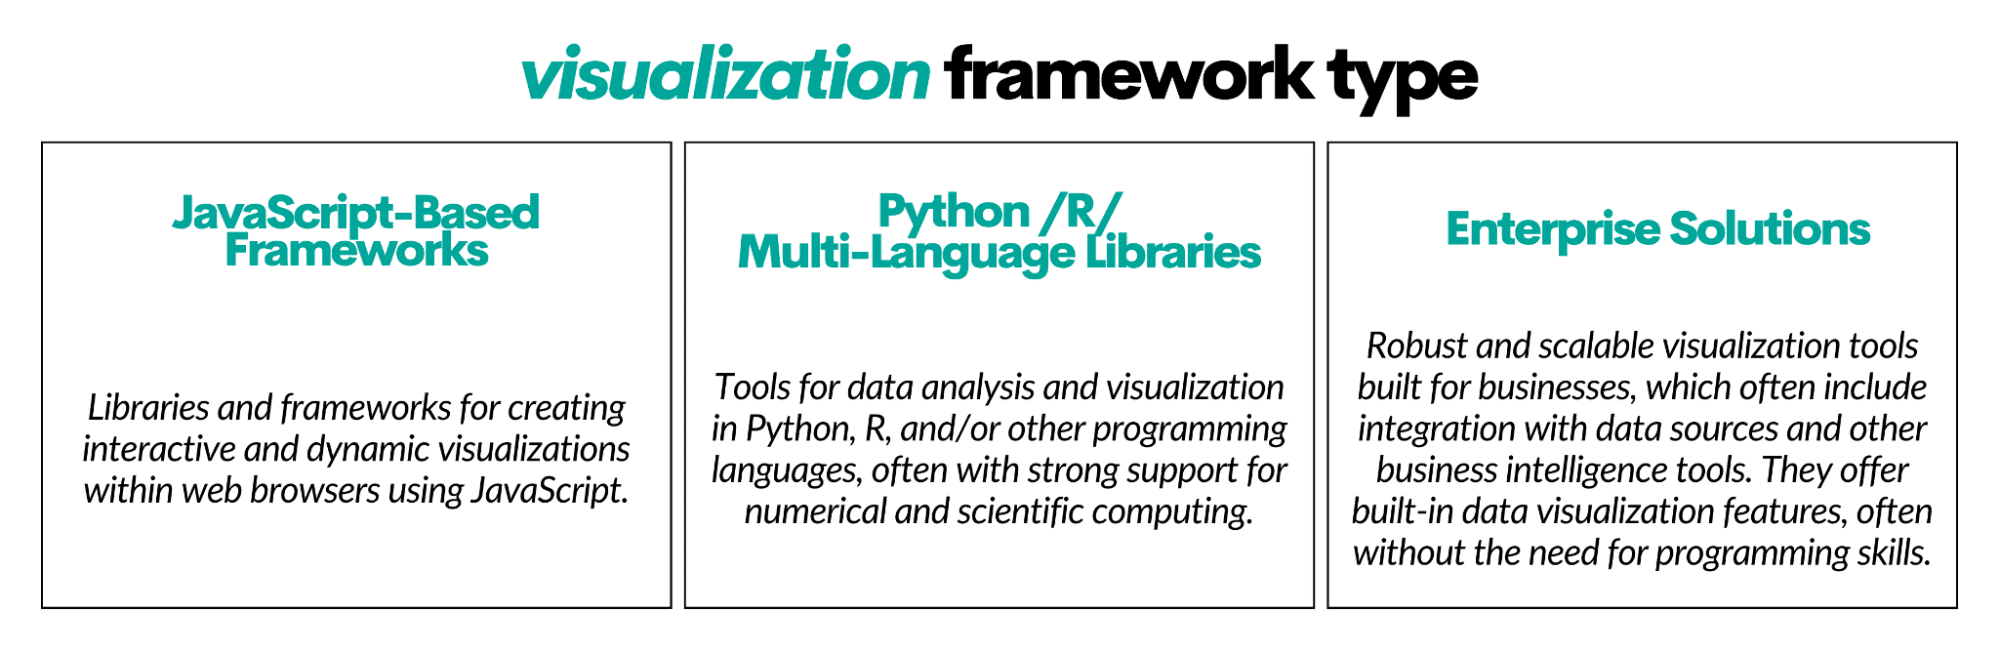 Types of Visualization Frameworks